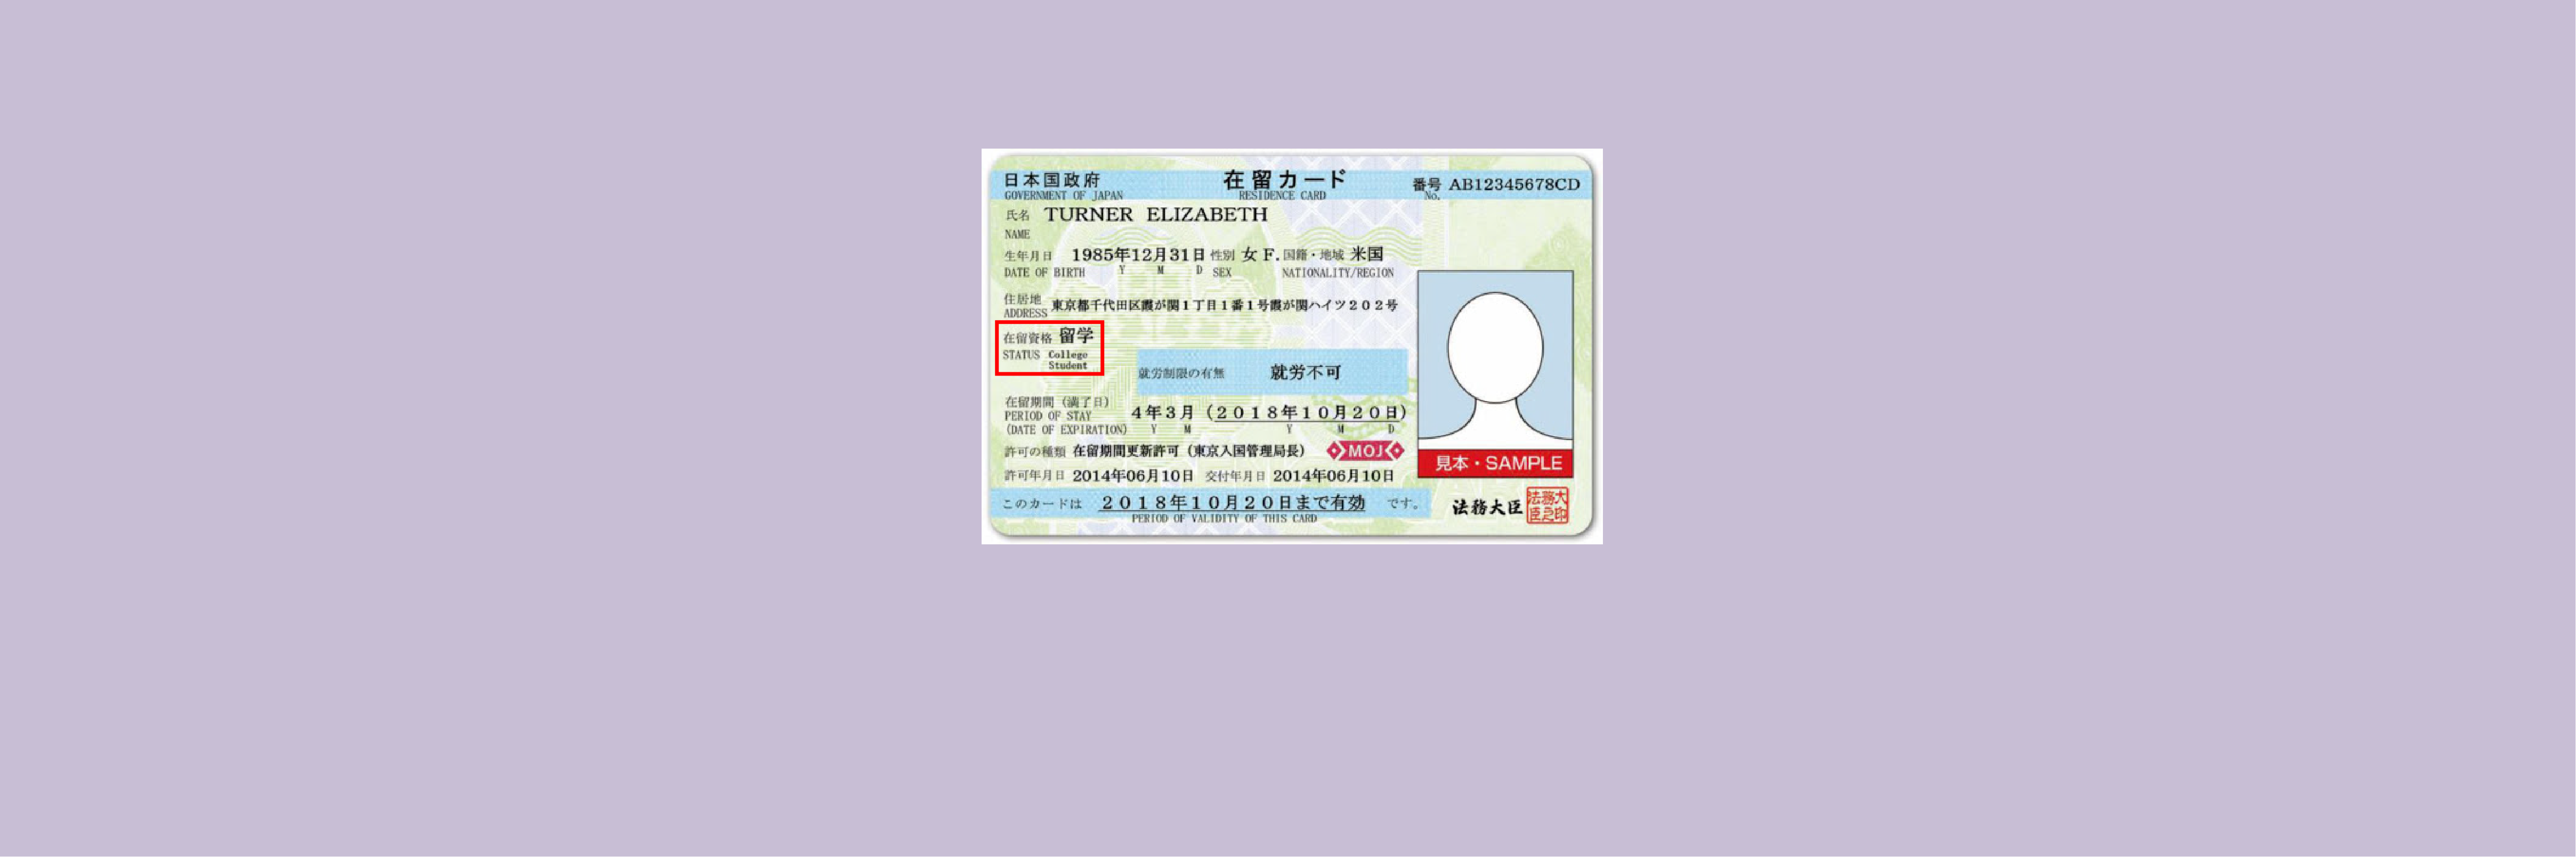 Residence Card Residence Status